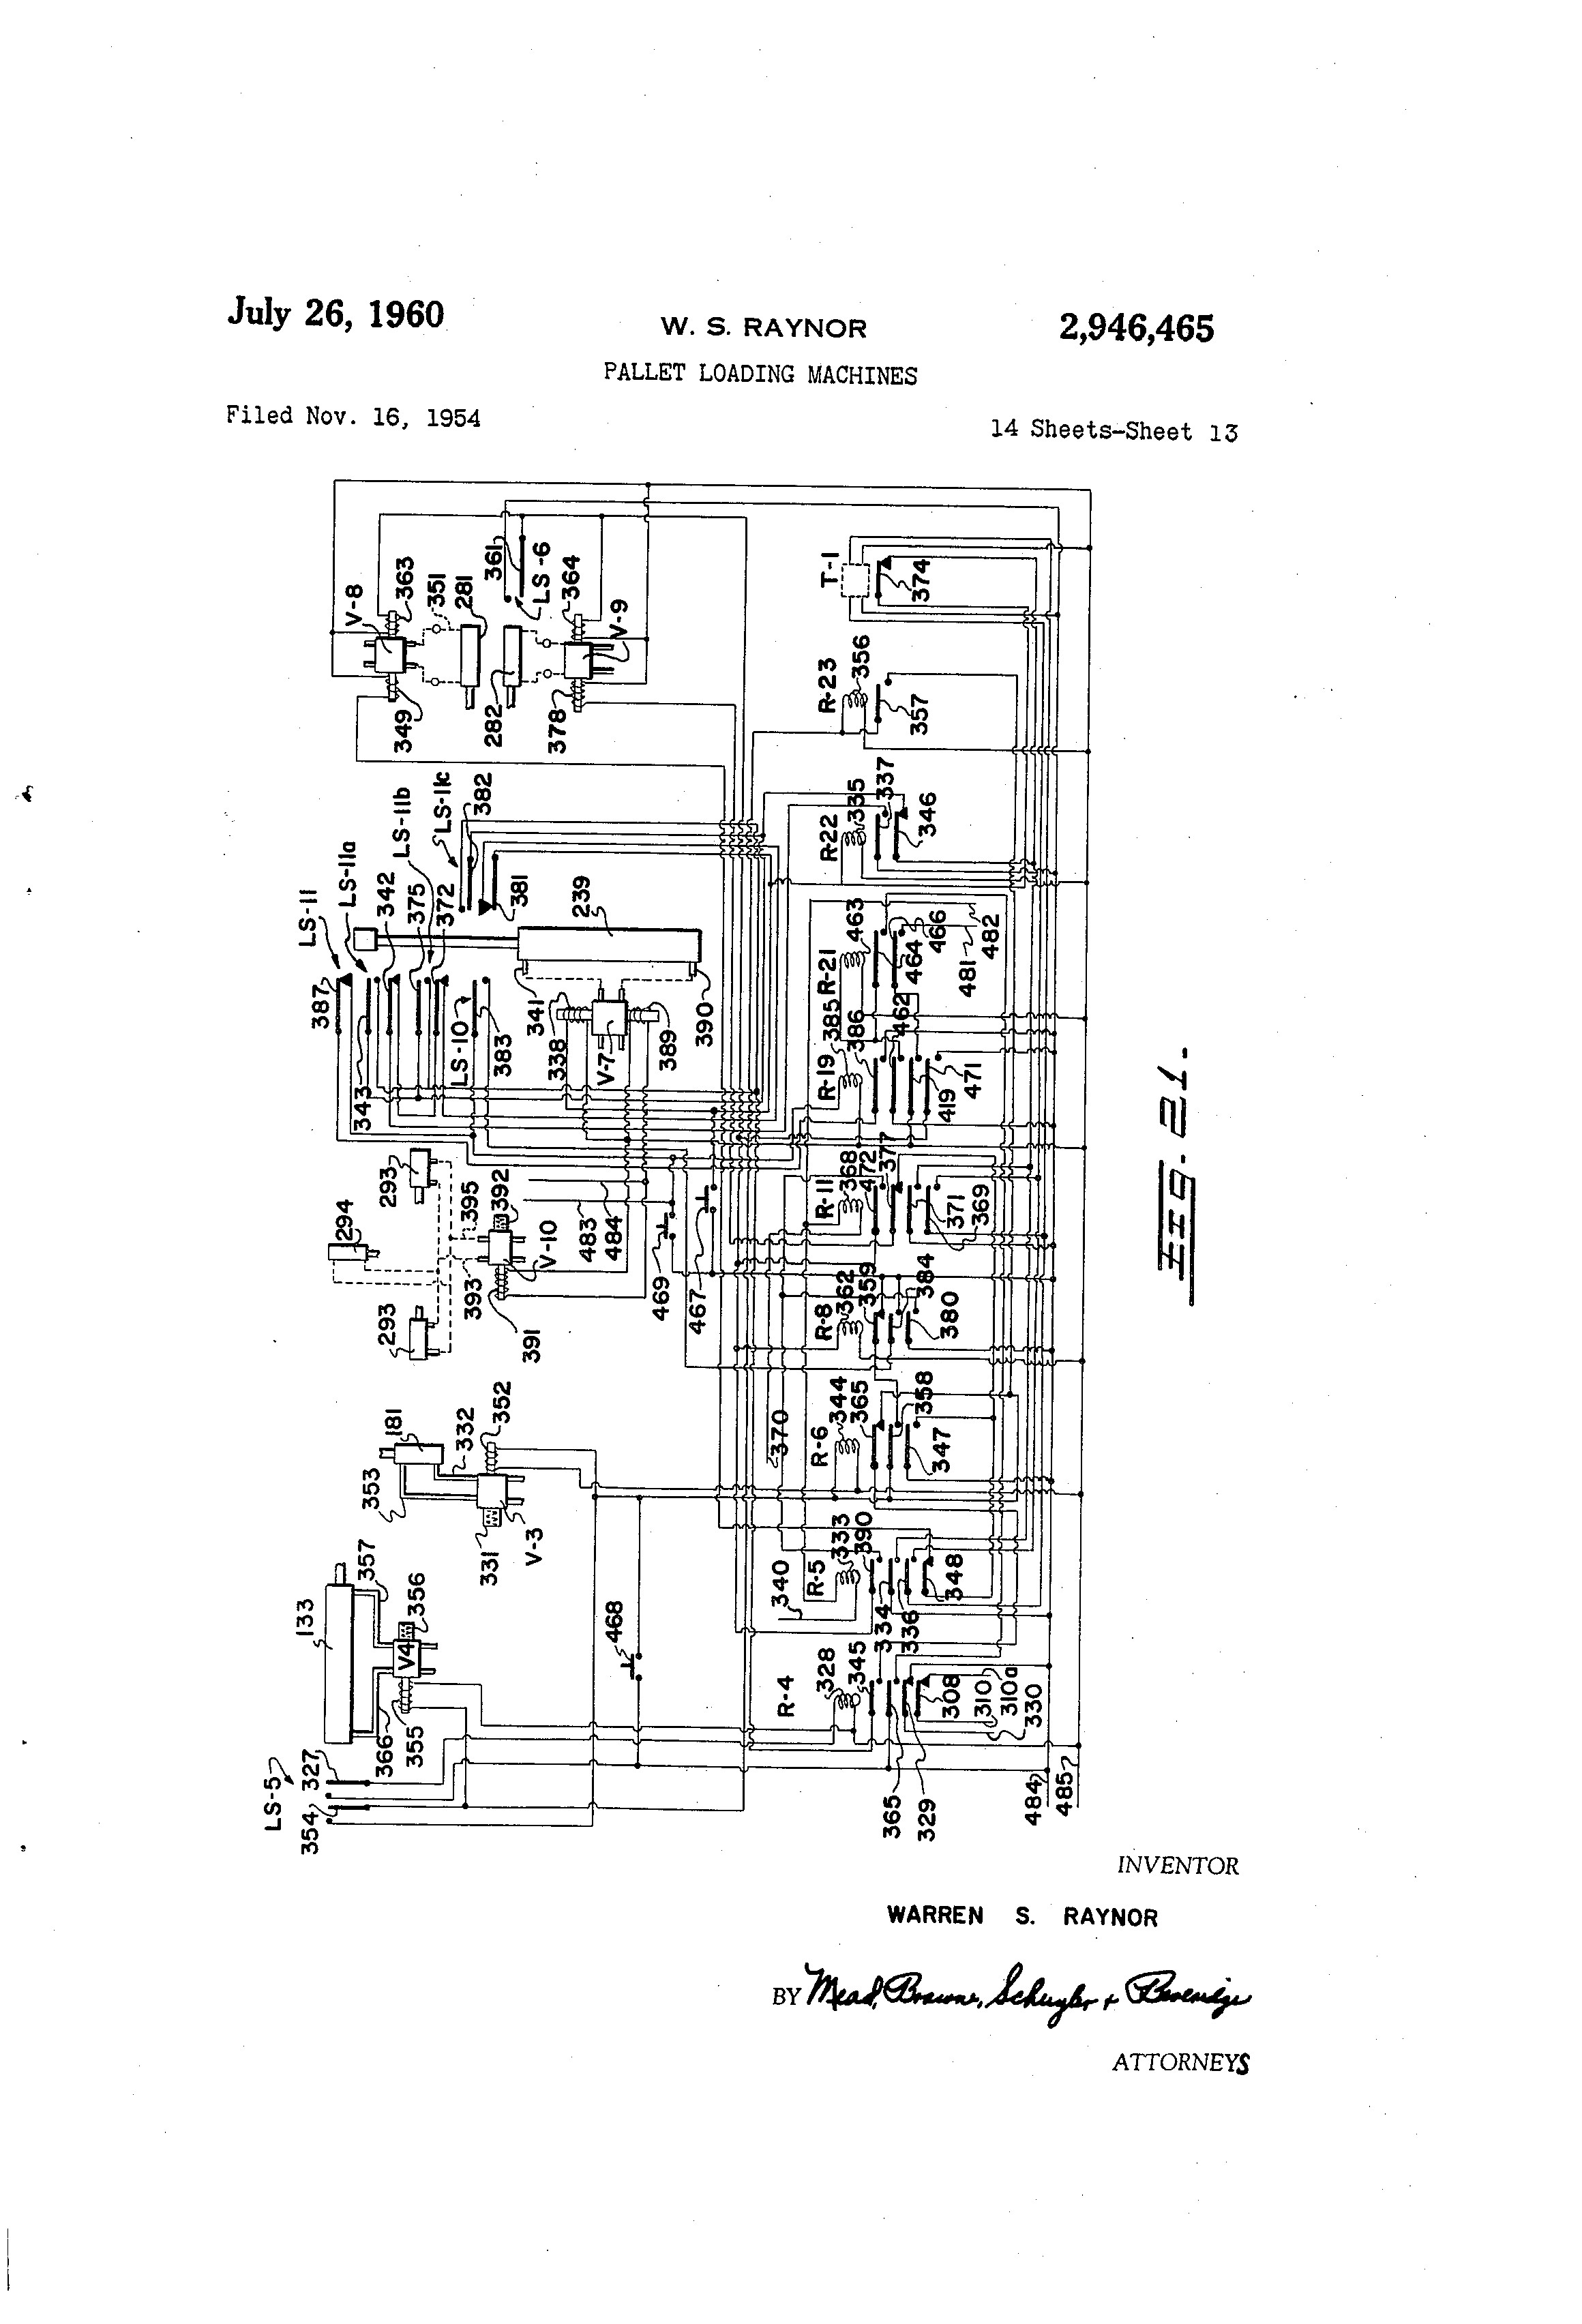 honda gx690 wiring diagram